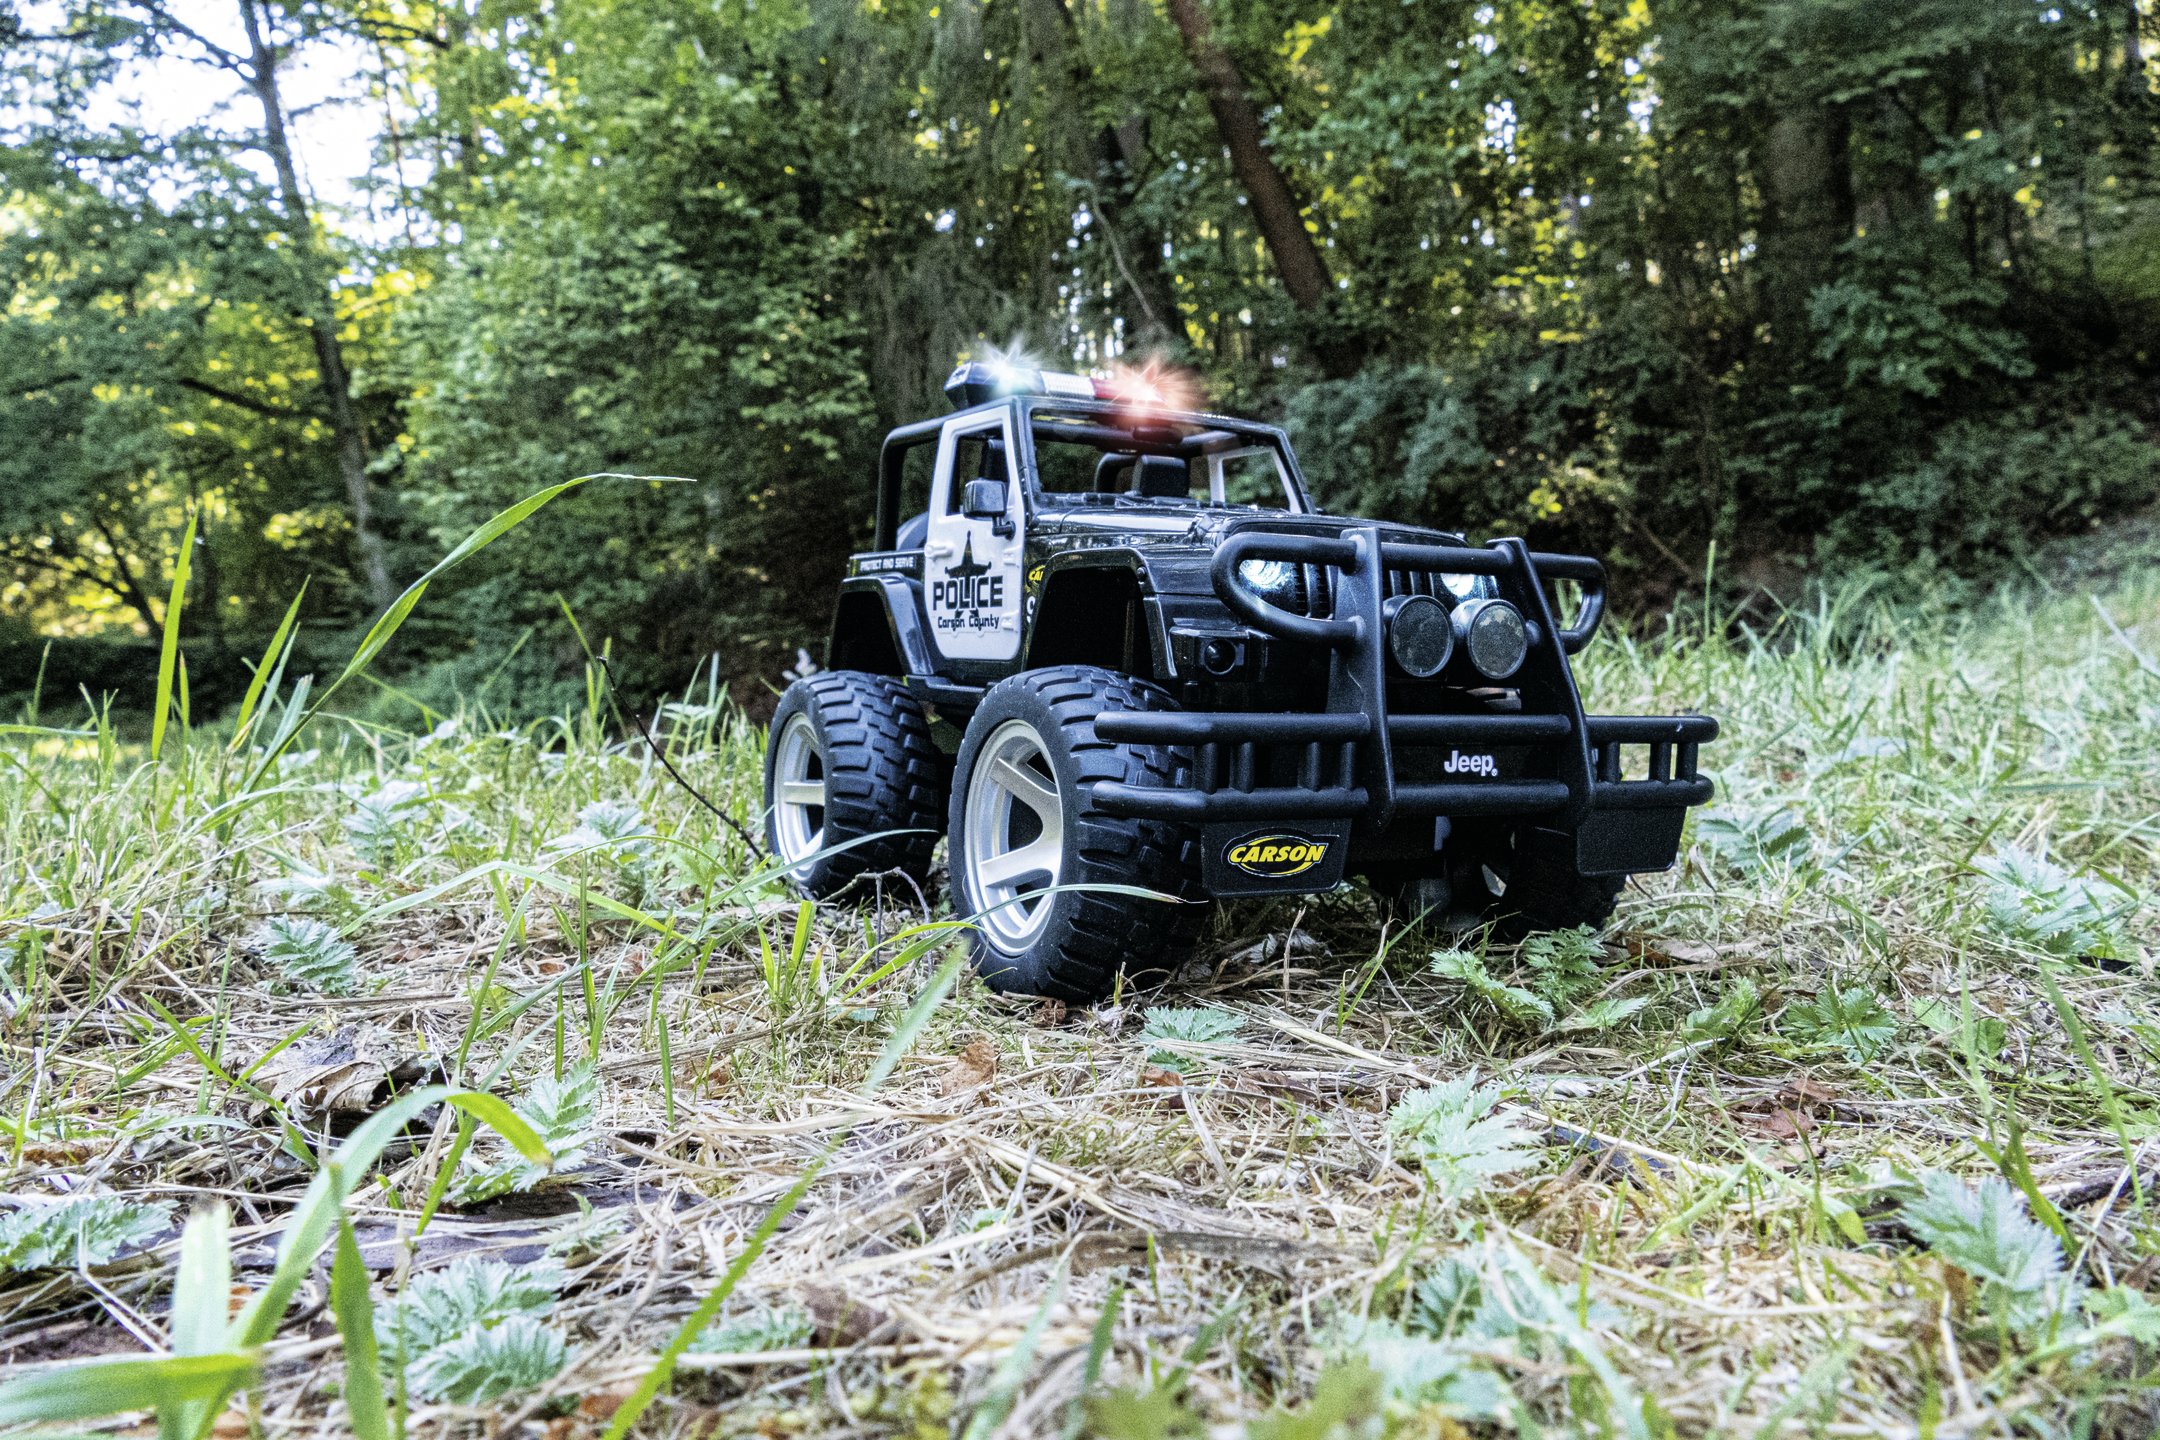 RTR Police CARSON Mehrfarbig 1:12 Wrangler 2.4G R/C Spielzeugauto, 100% Jeep